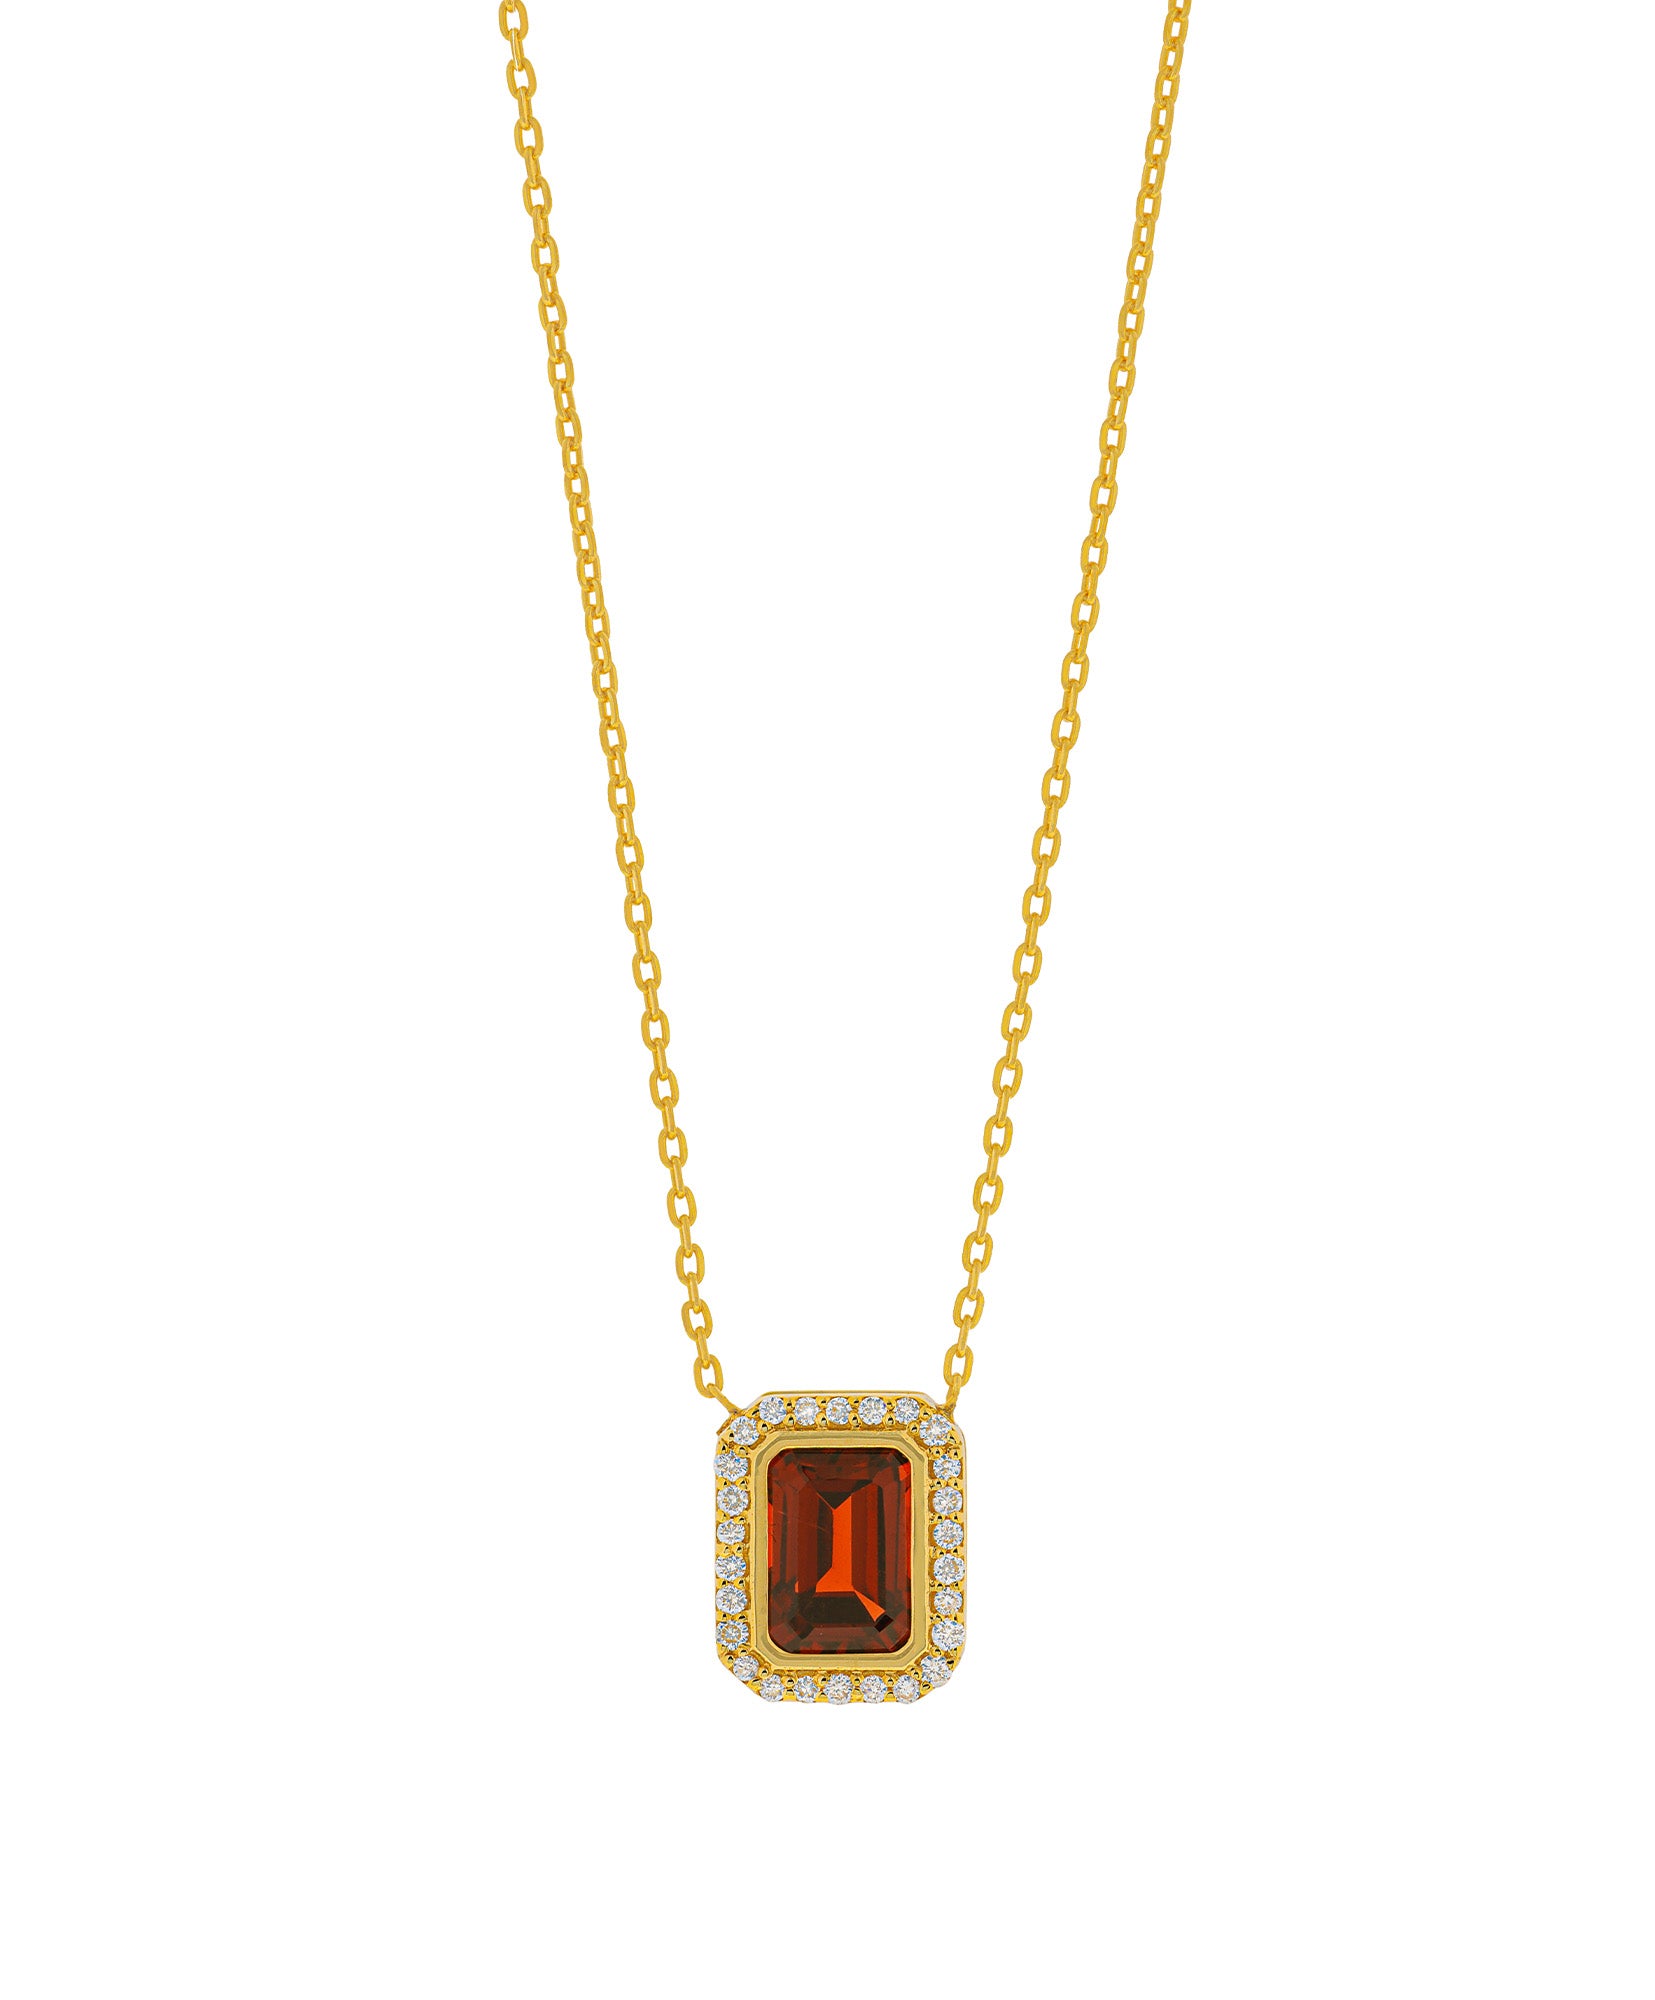 J by boghossian, necklace, gold, diamonds, ruby